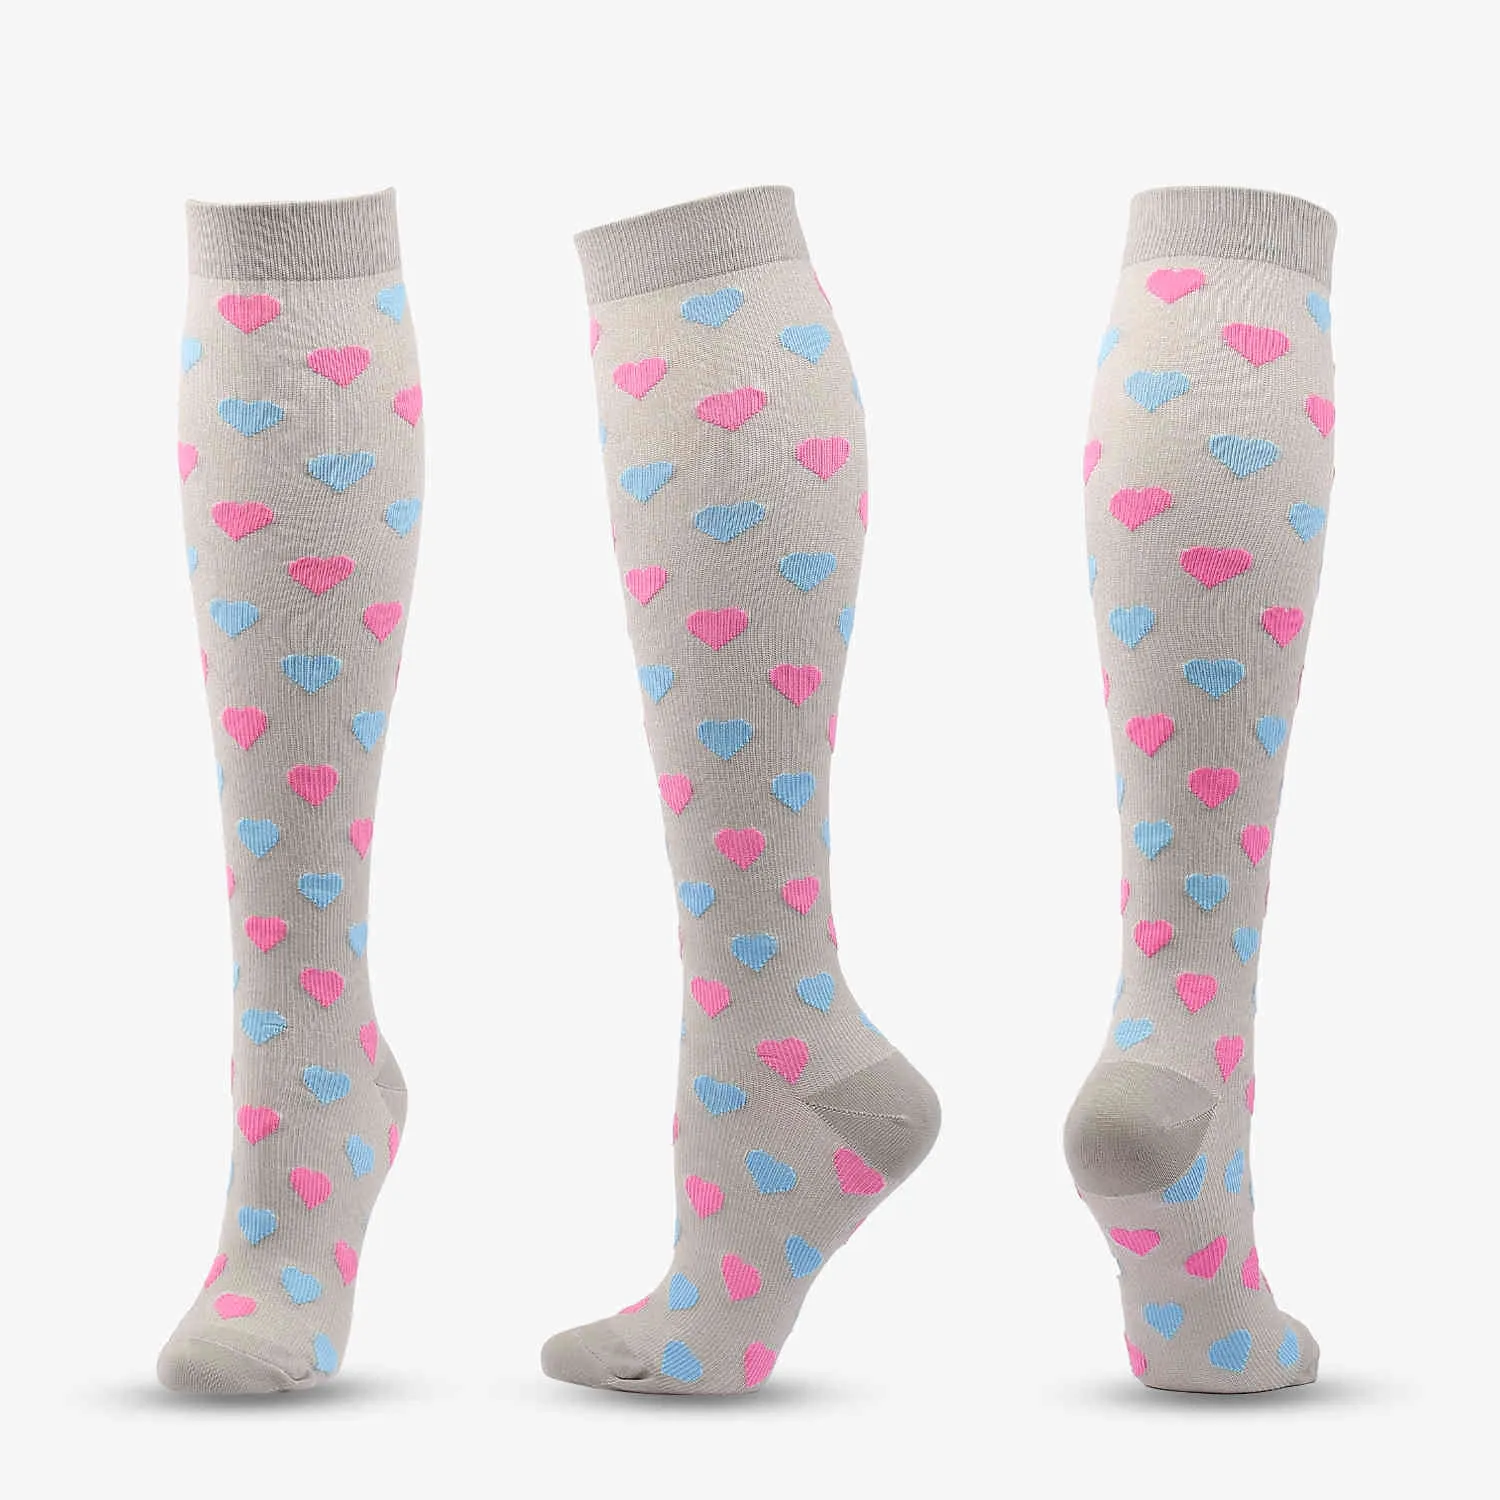 Medias de compresión Mujeres calcetines de presión compresa deportes gris claro de amor oscuro rayas patrón de pingüino nylon diversión SM2974173